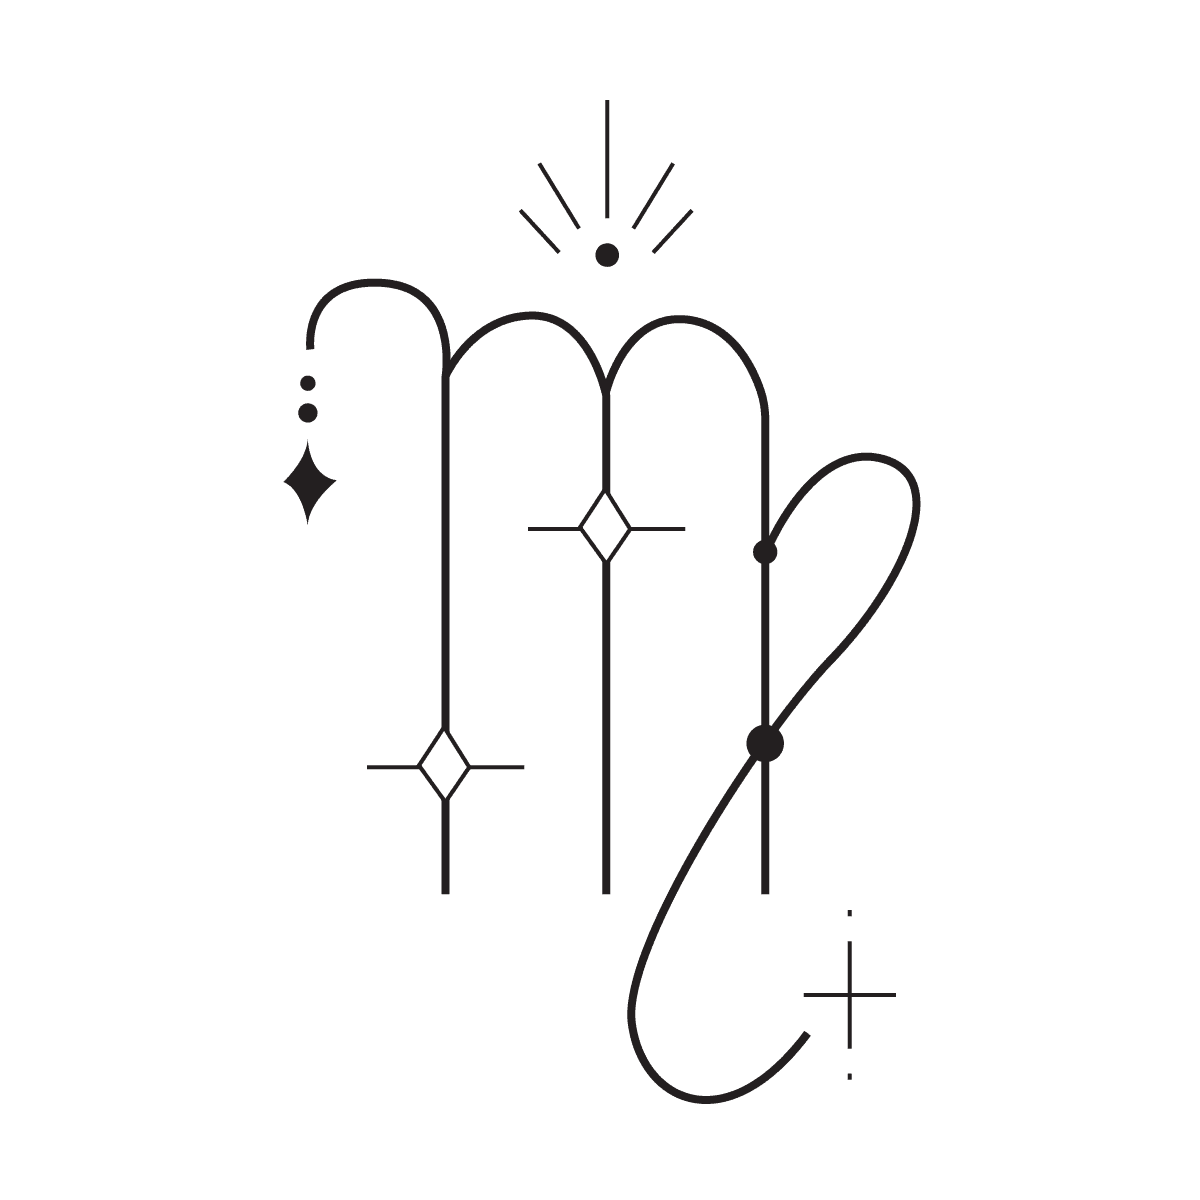 minimalist zodiac sign tattoo art in elegant line style featuring intricate decorative elements